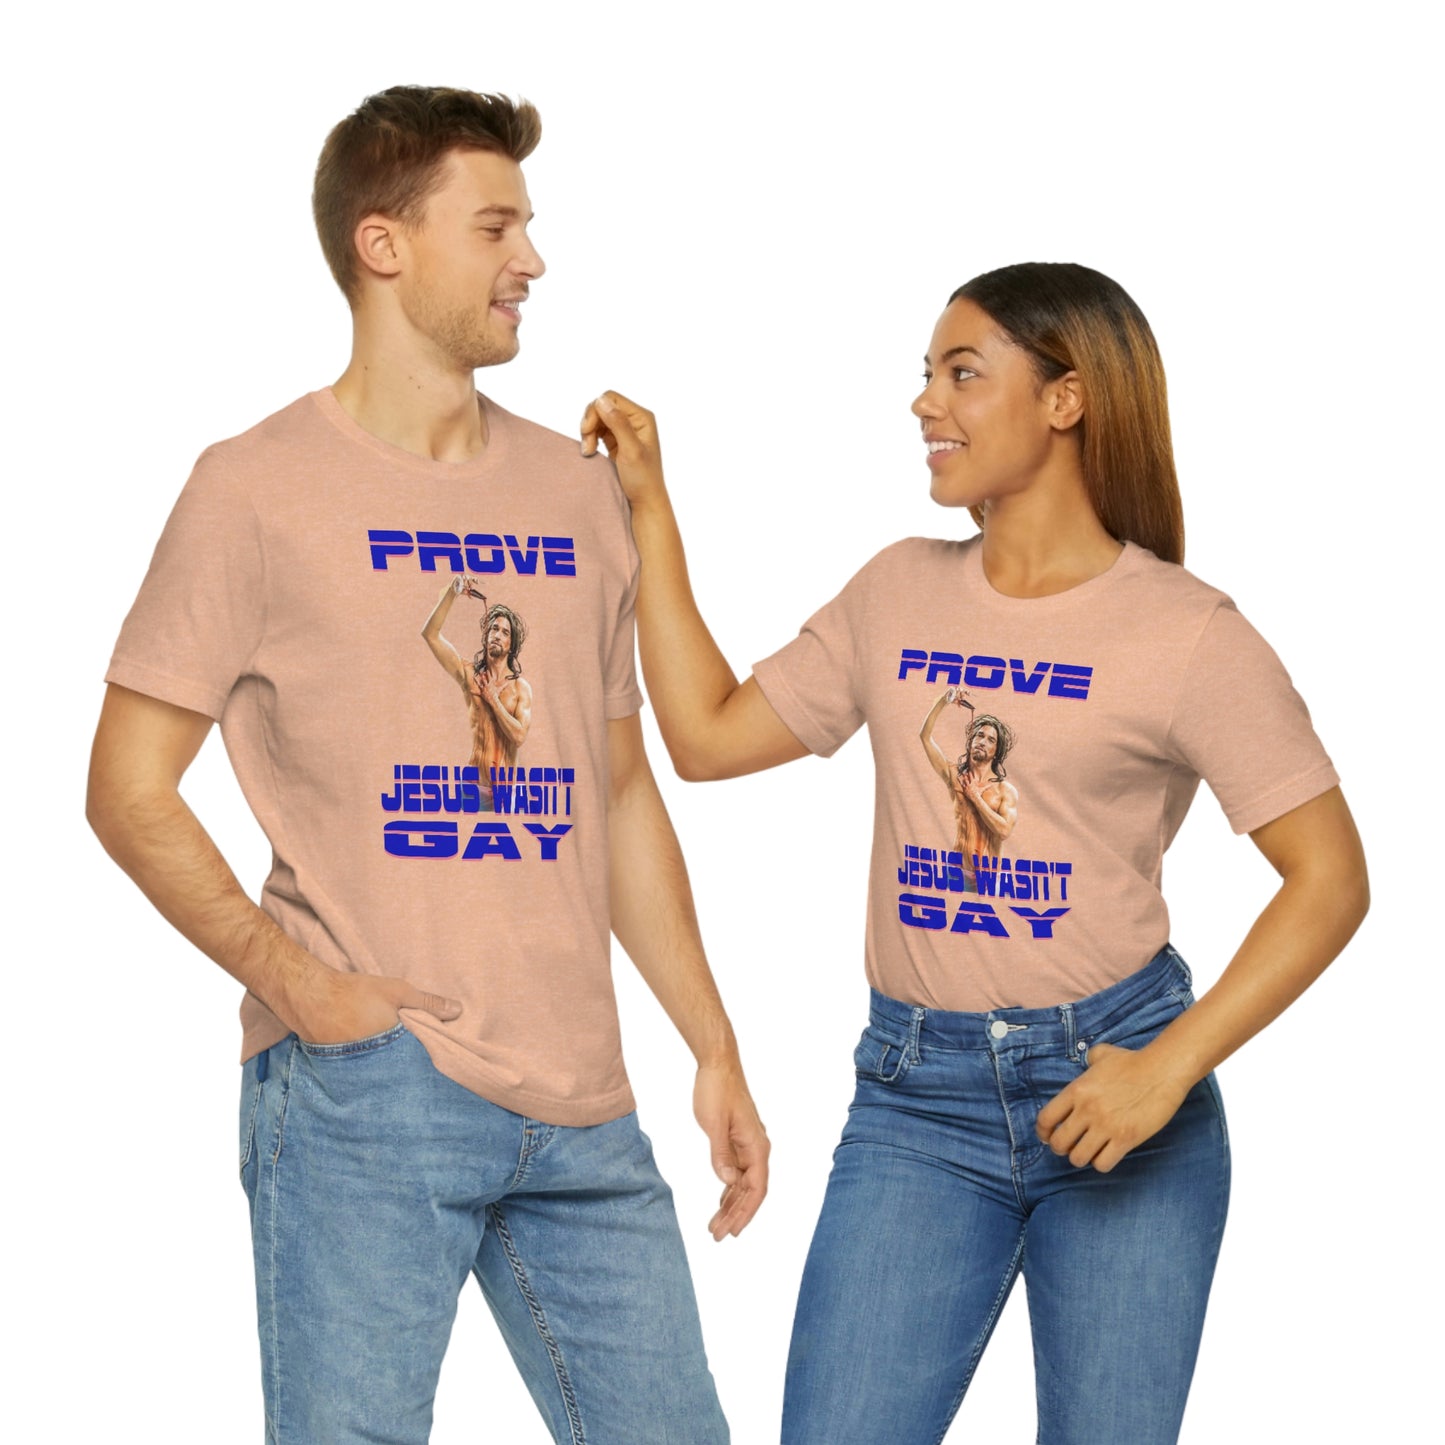 Prove Jesus Wasn't Gay Tee